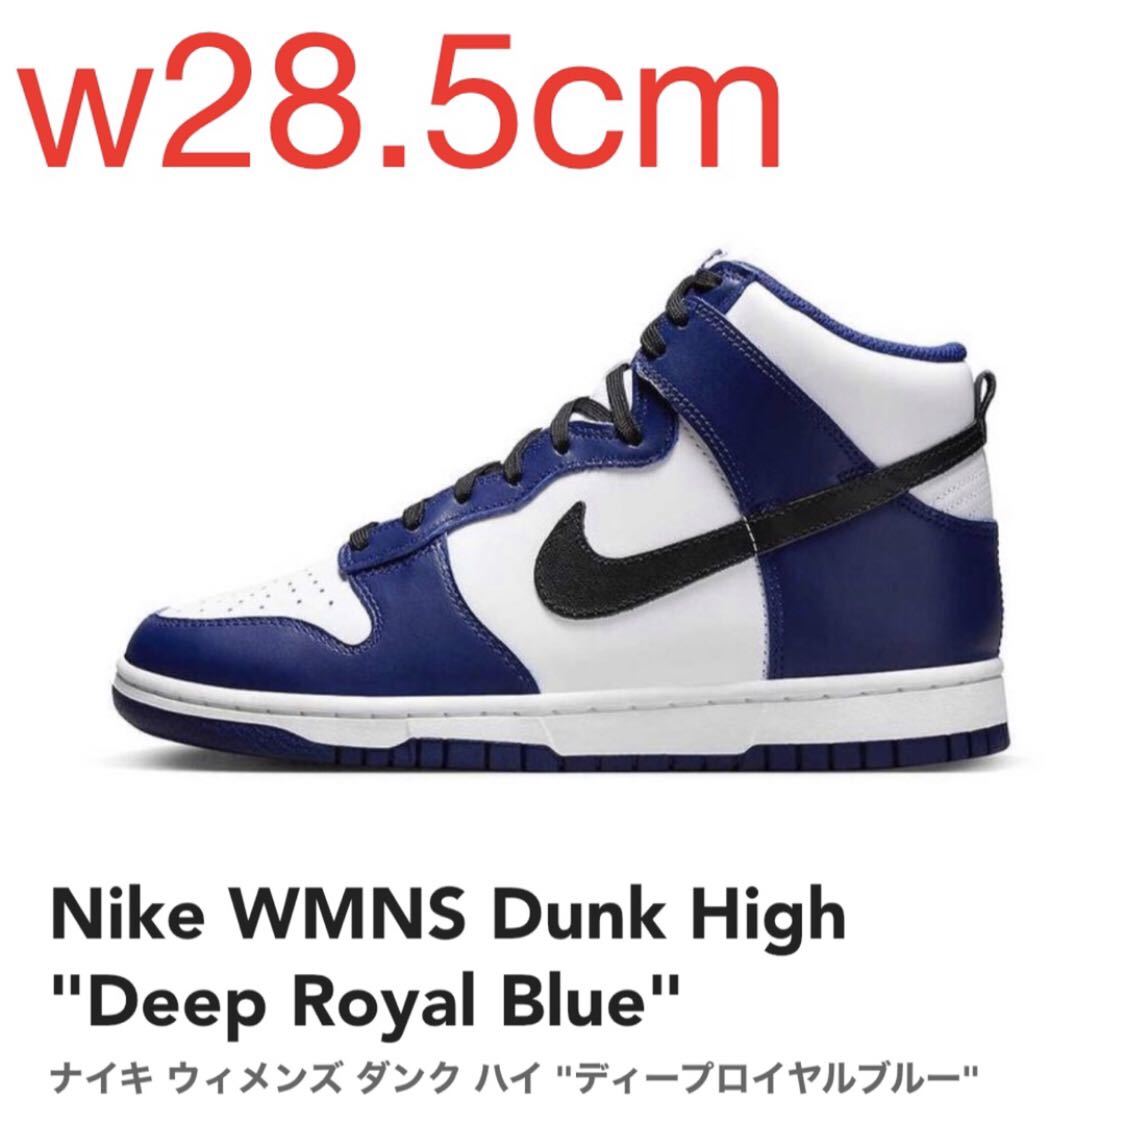 T Nike WMNS Dunk High Deep Royal Blue ナイキ ウィメンズ ダンク ハイ ディープロイヤルブルー DD1869-400 w28.5cm US11.5w 新品_画像1